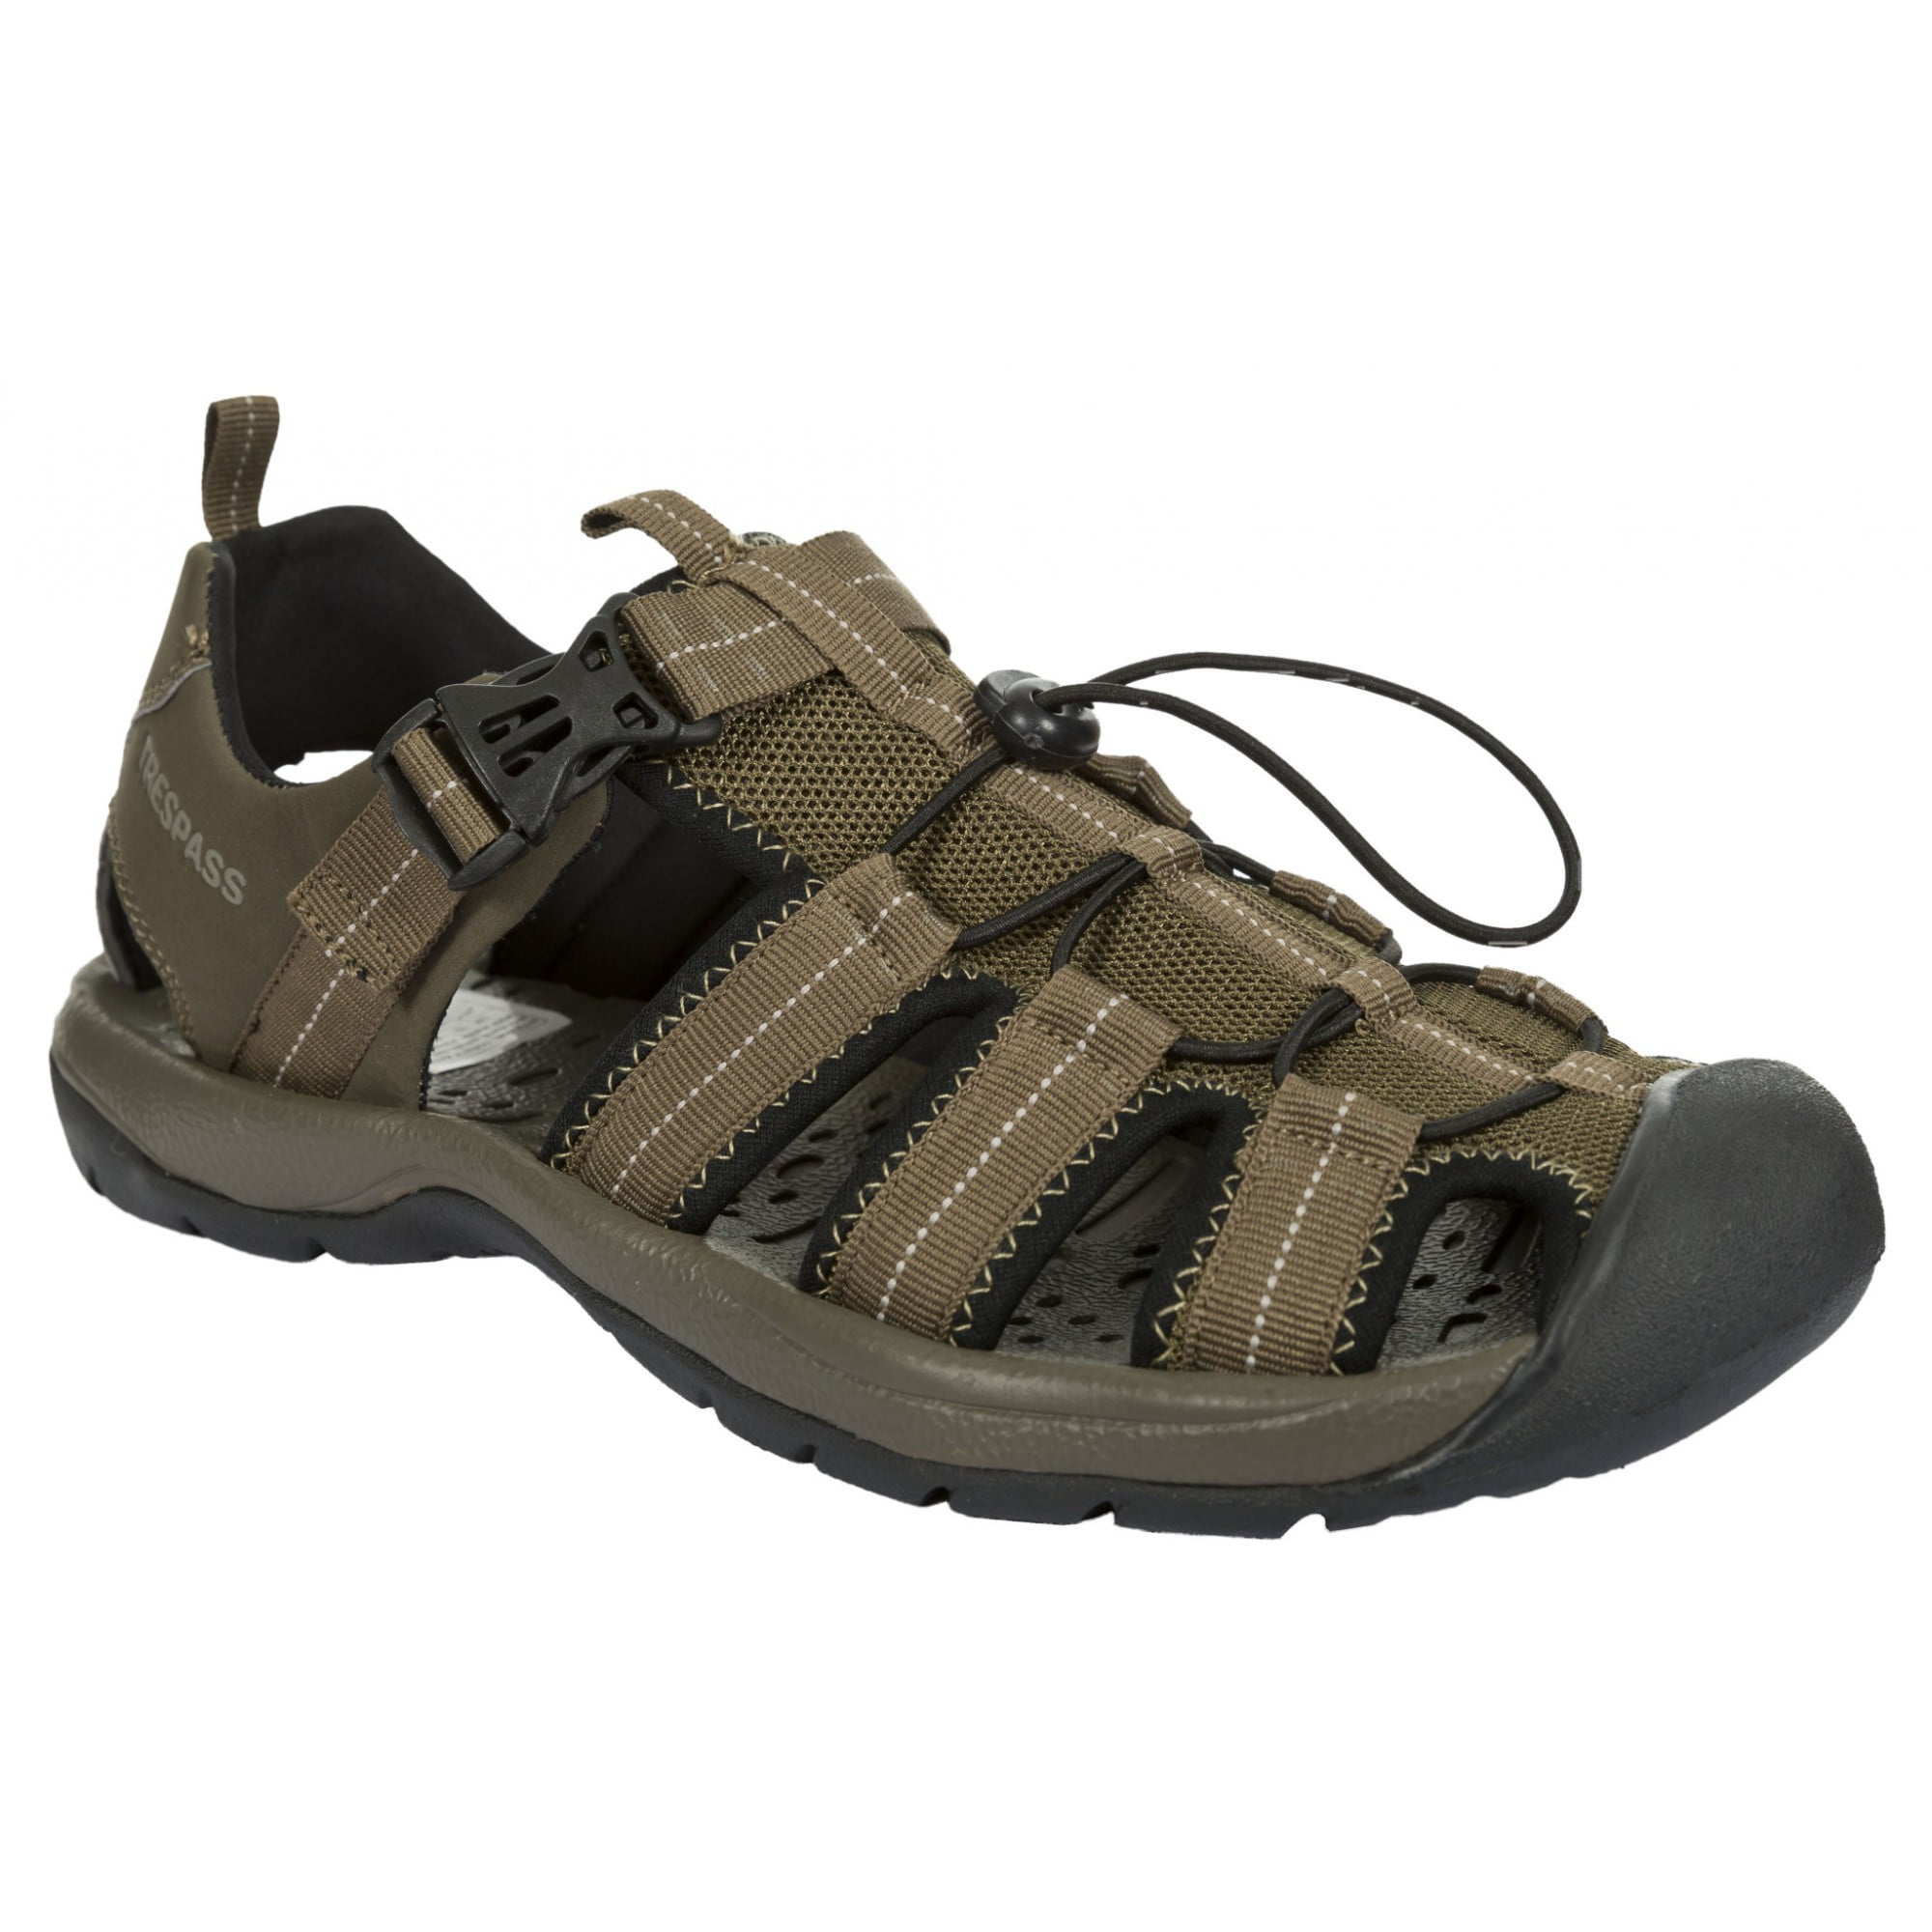 Trespass Mens Torrance Closed Toe Adjustable Outdoors Walking Hiking Sandals 